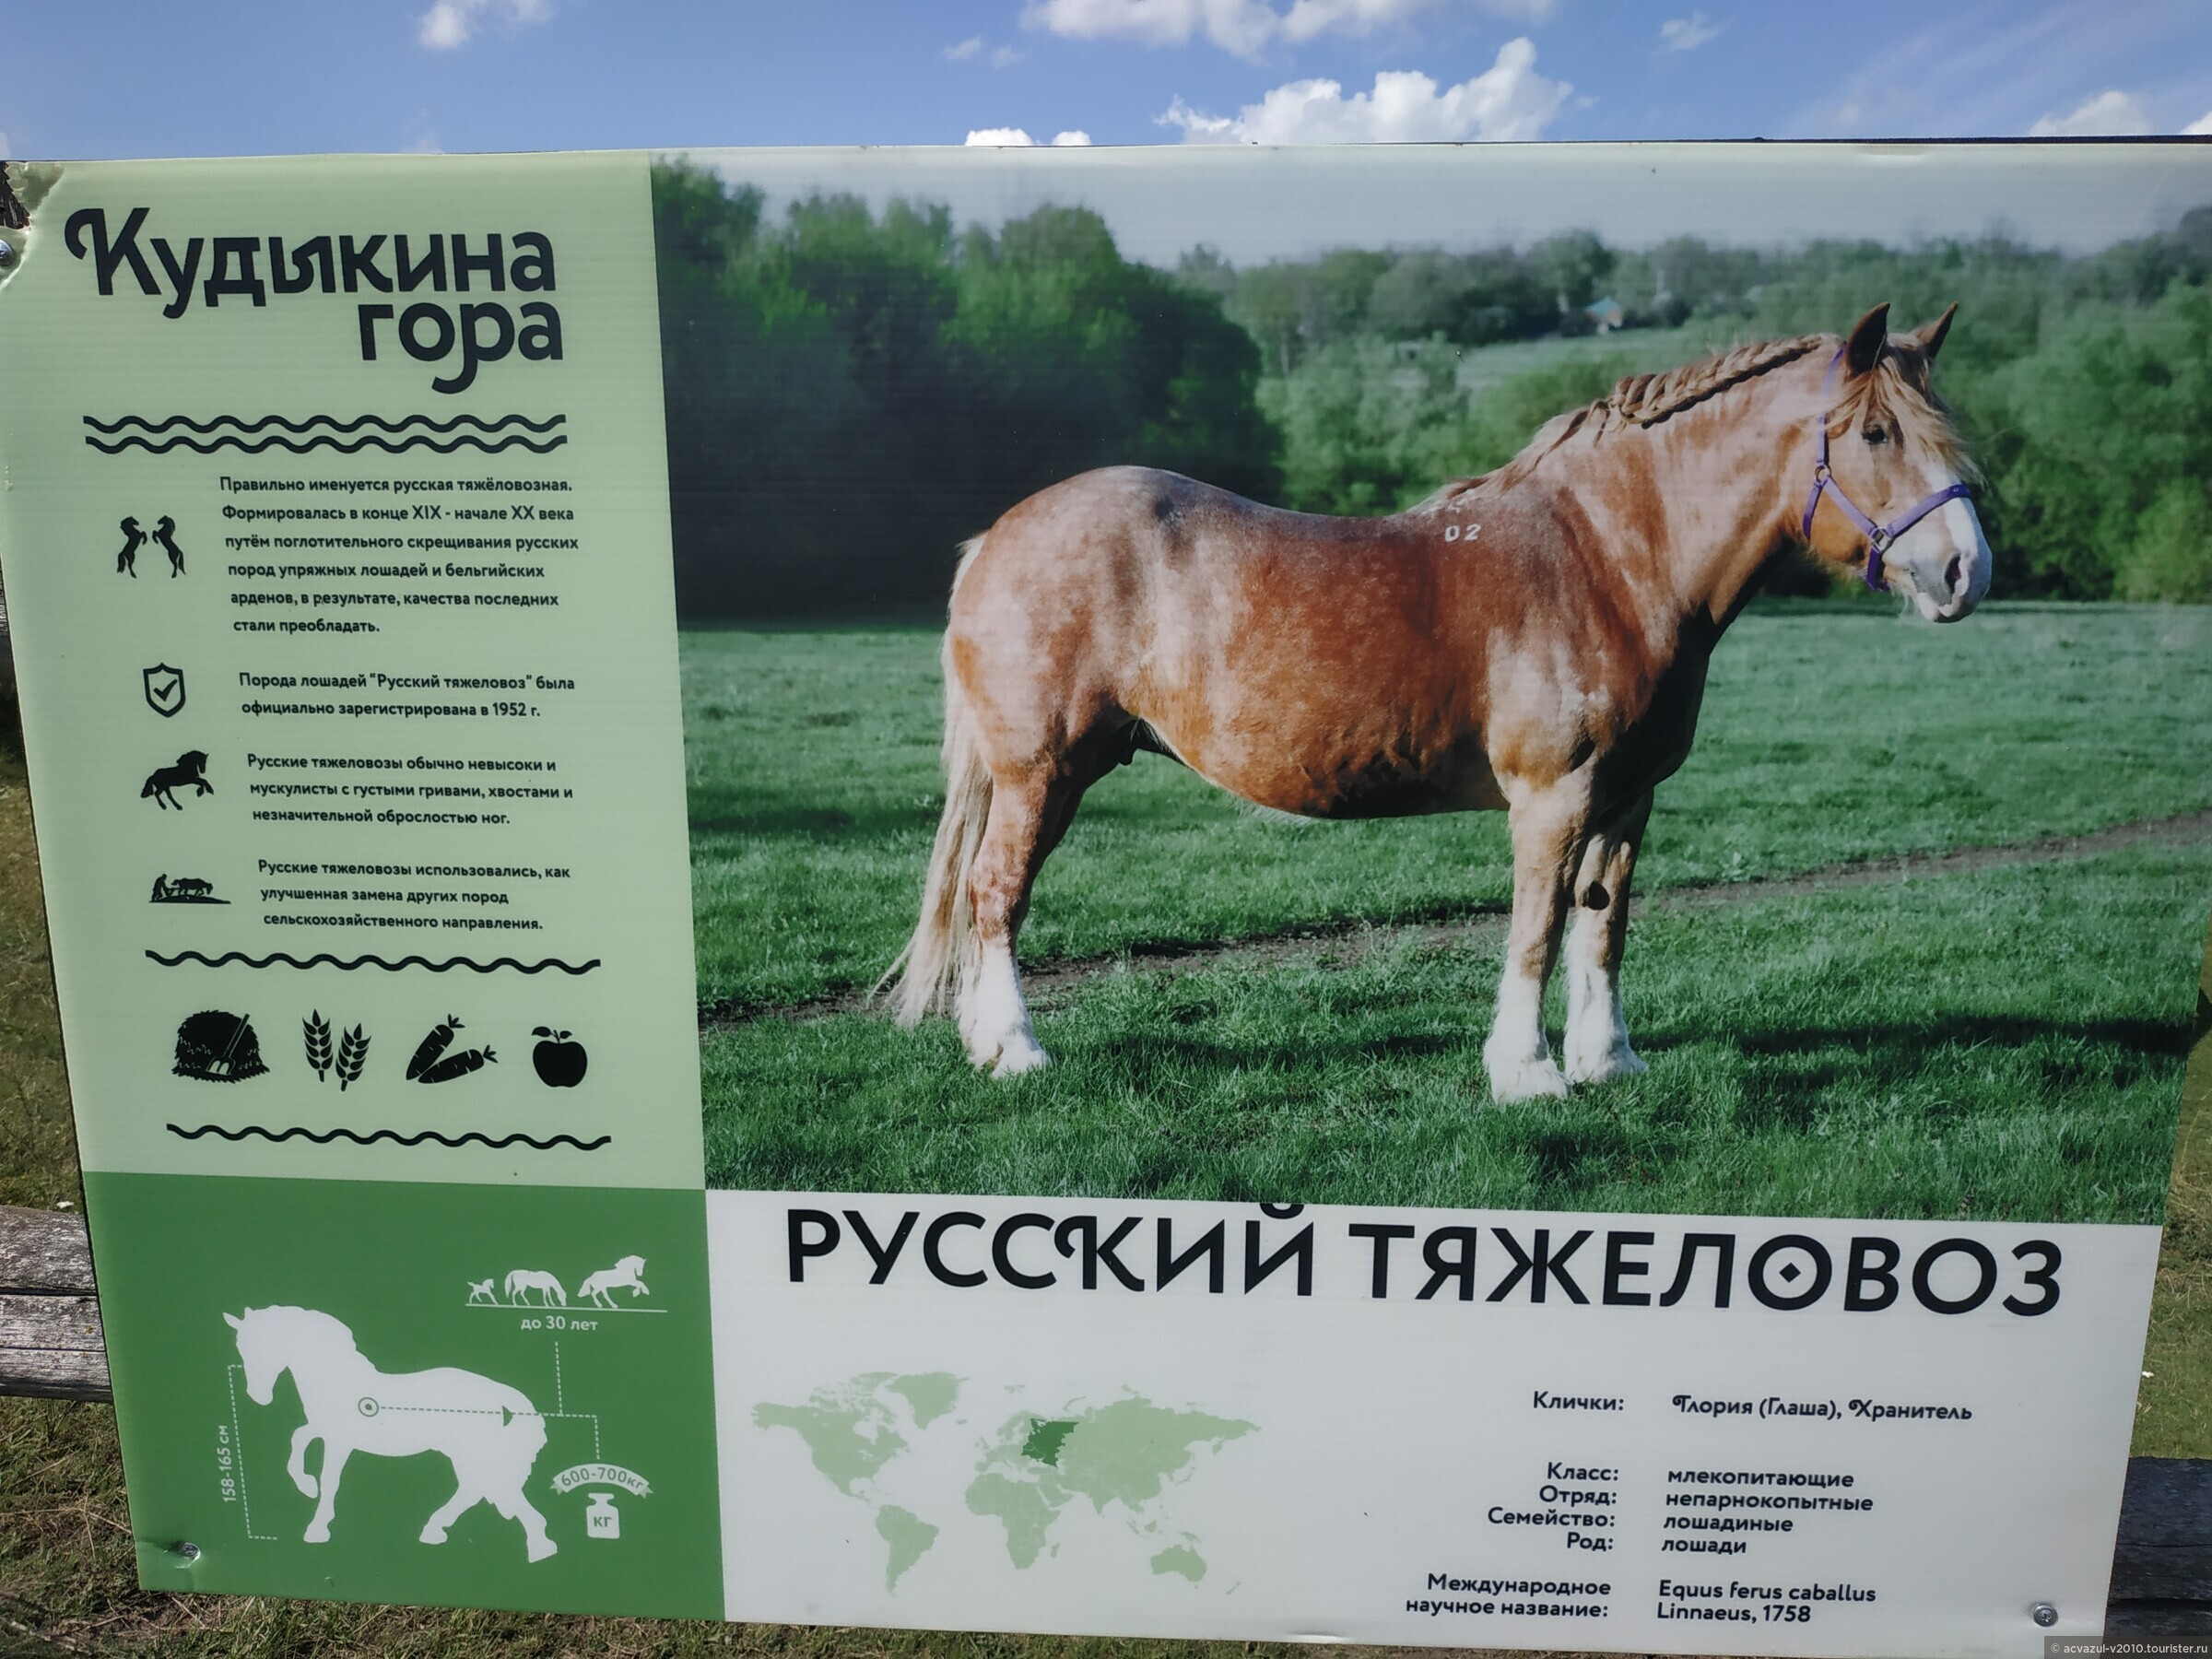 Kudikina ru автобус. Лошади на Кудыкиной горе. Кудыкина гора лошади. Лошадь тяжеловоз на Кудыкиной горе. Породы коней на Кудыкиной горе.